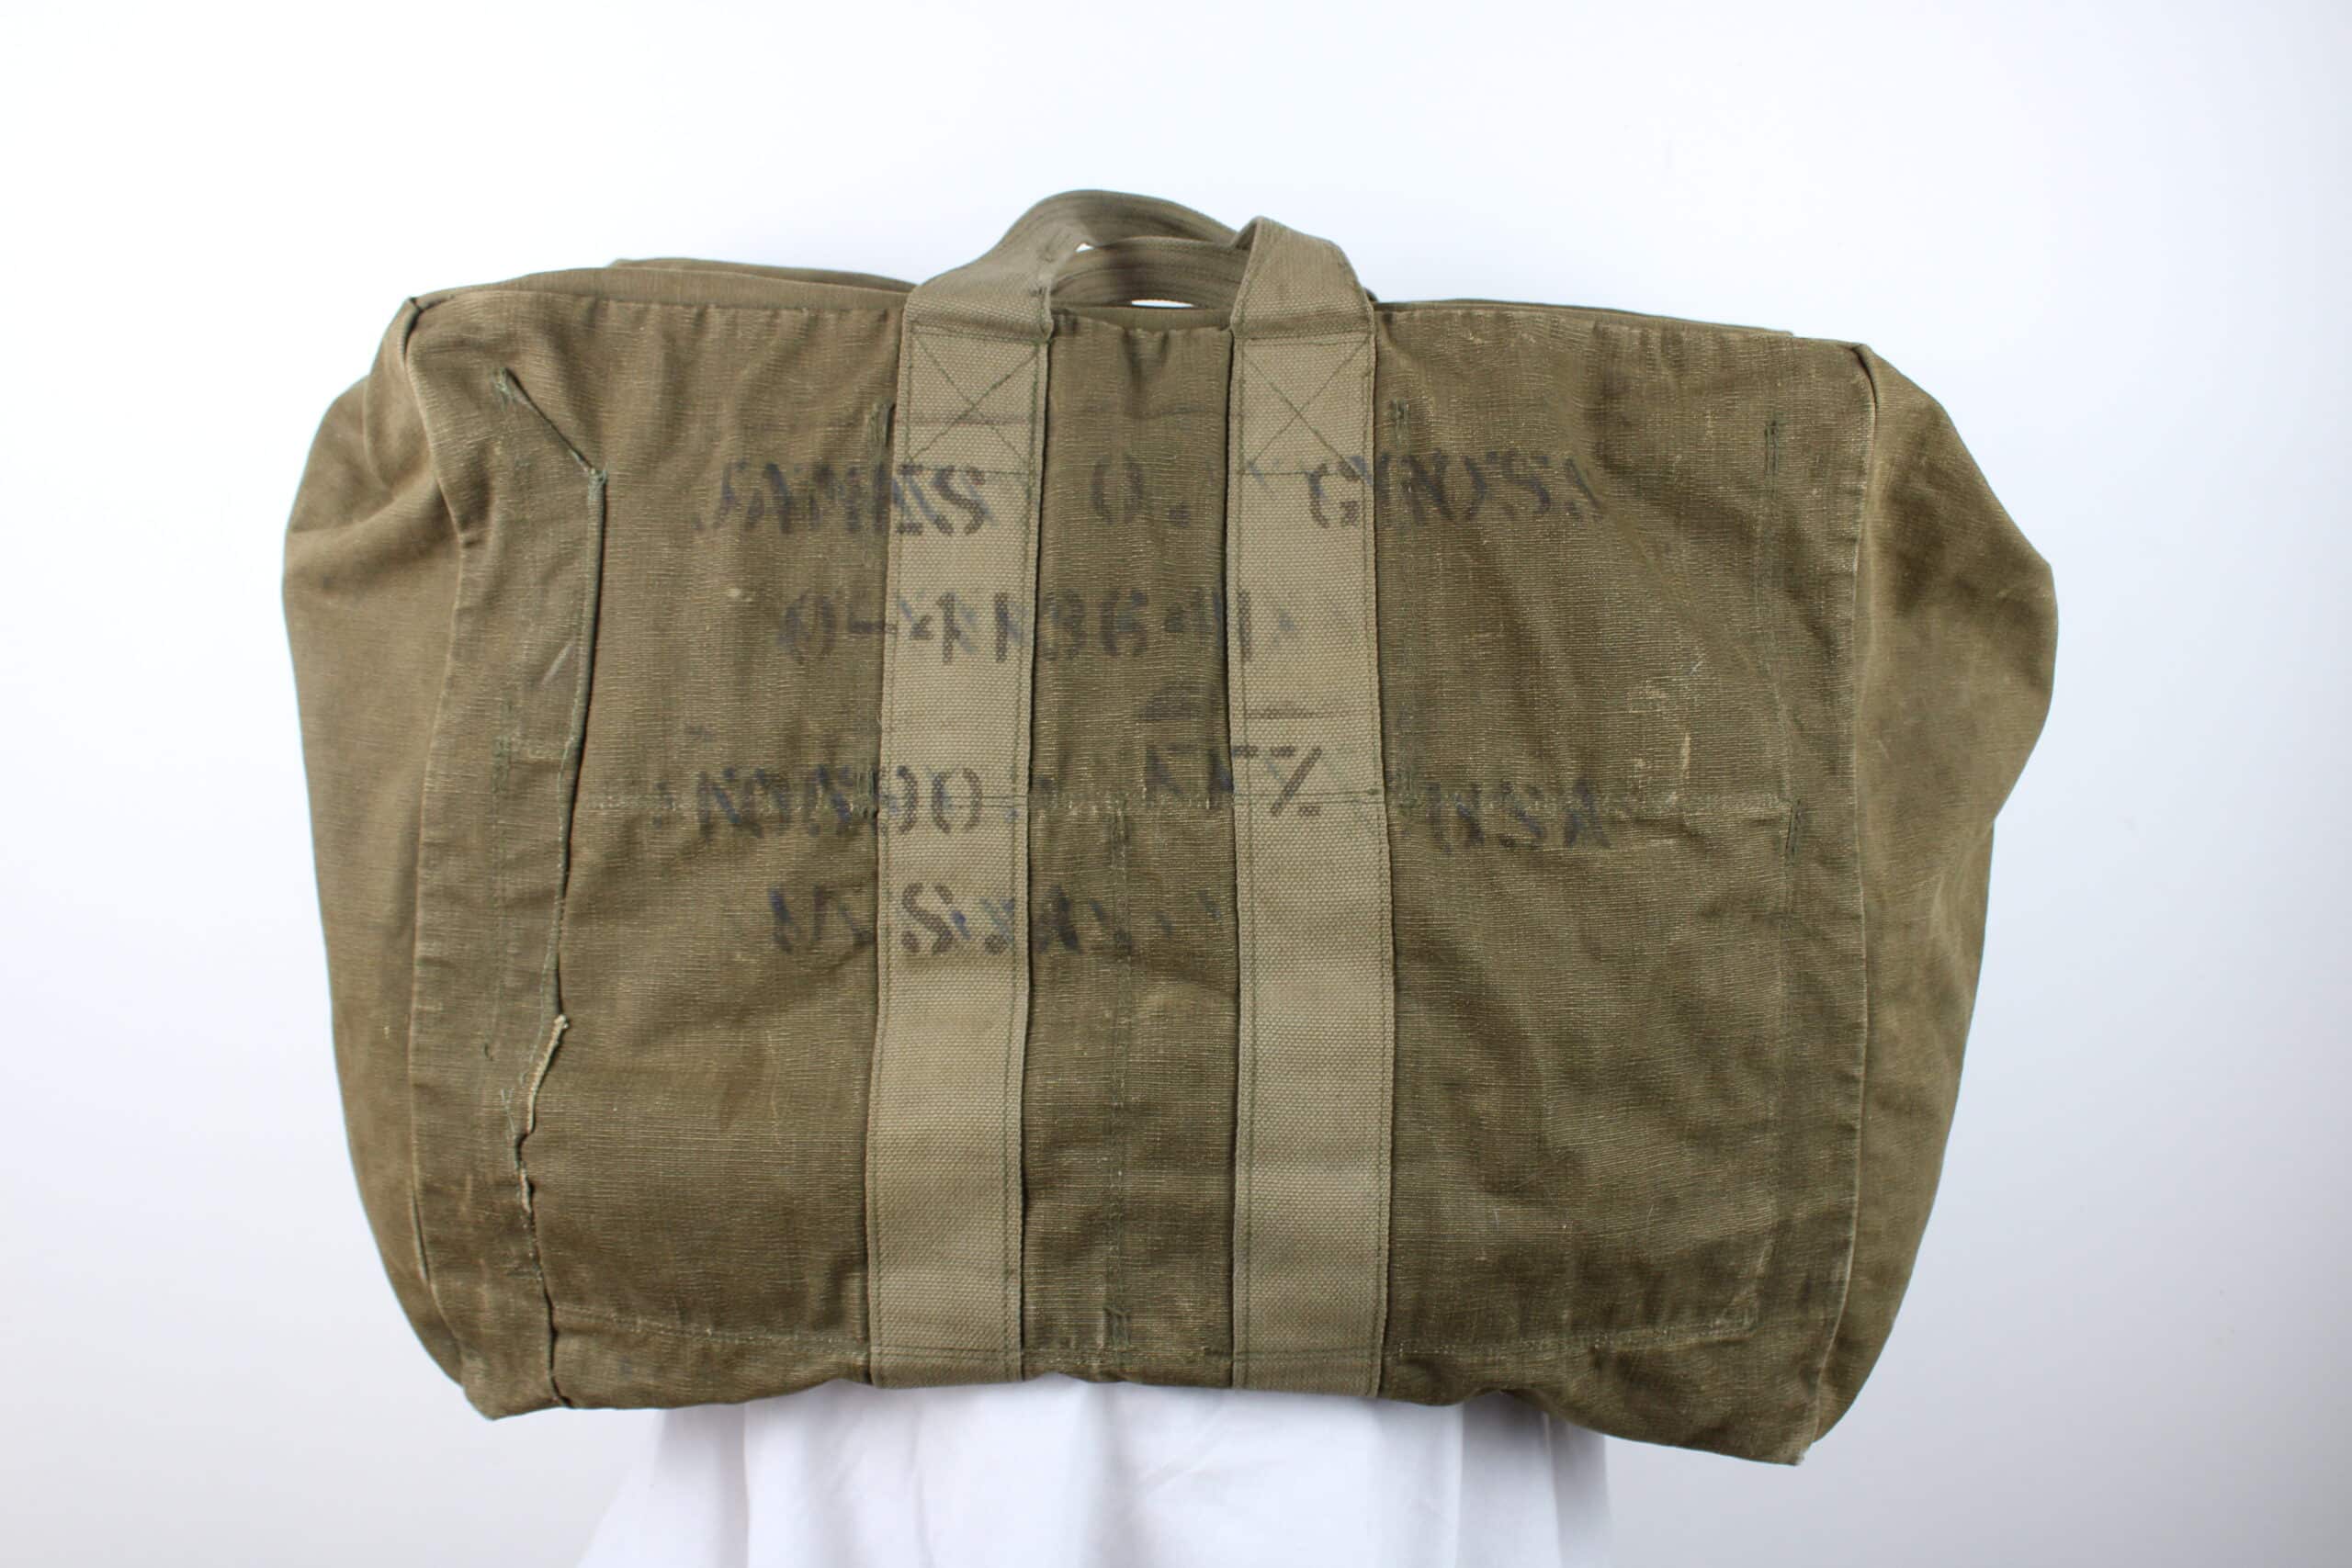 (Français) Aviator Kit Bag nominatif James O Gross 8th Air Force B17 